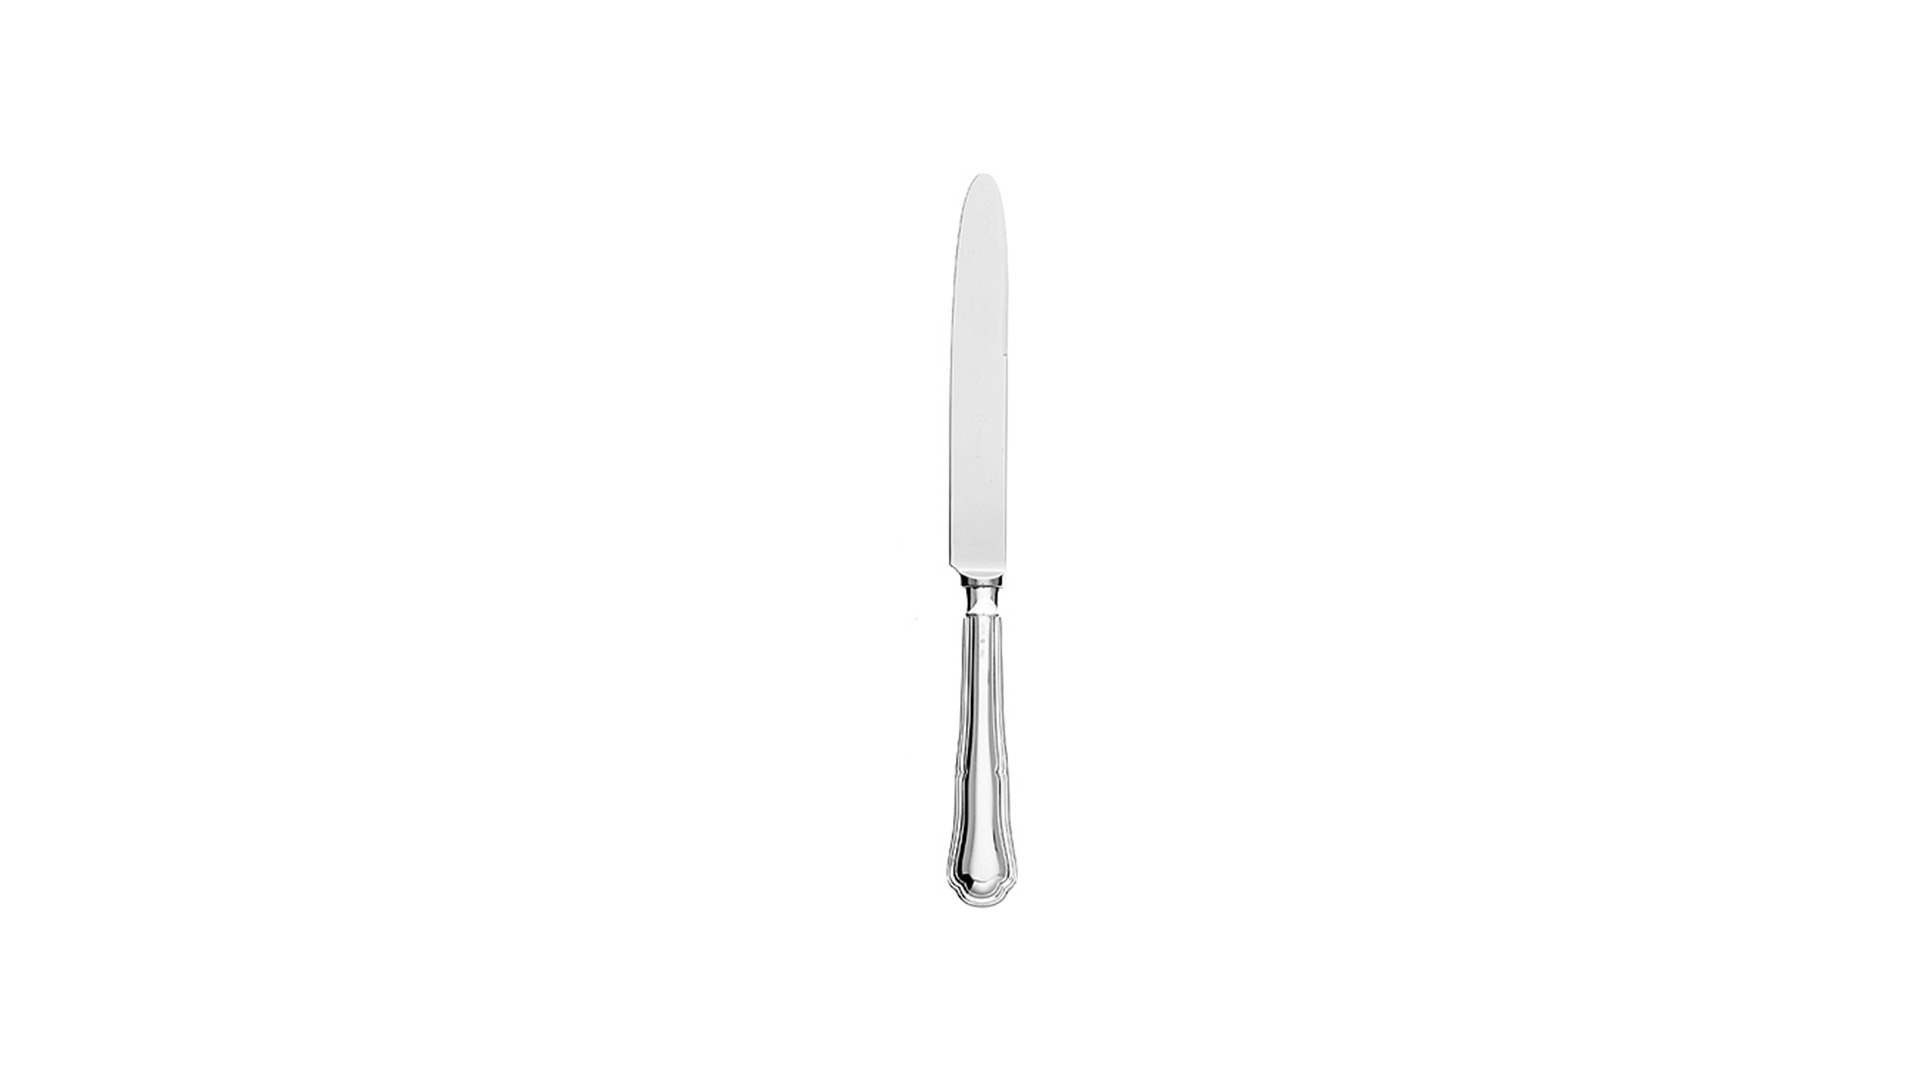 Нож столовый 25 см Schiavon Барочино, серебро 925пр